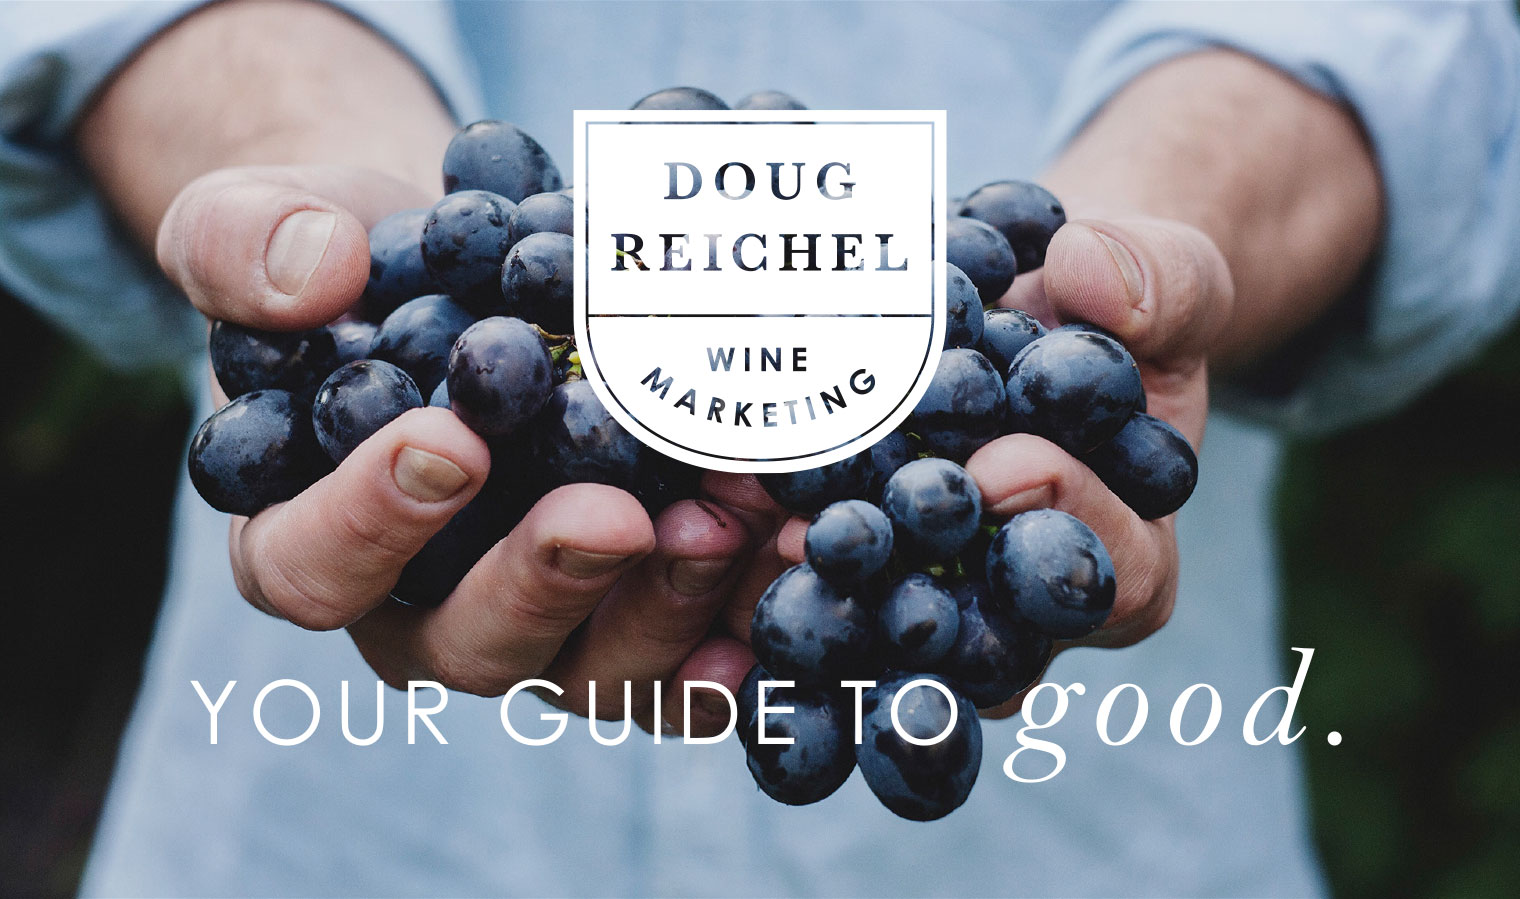 Doug Reichel Wine Marketing